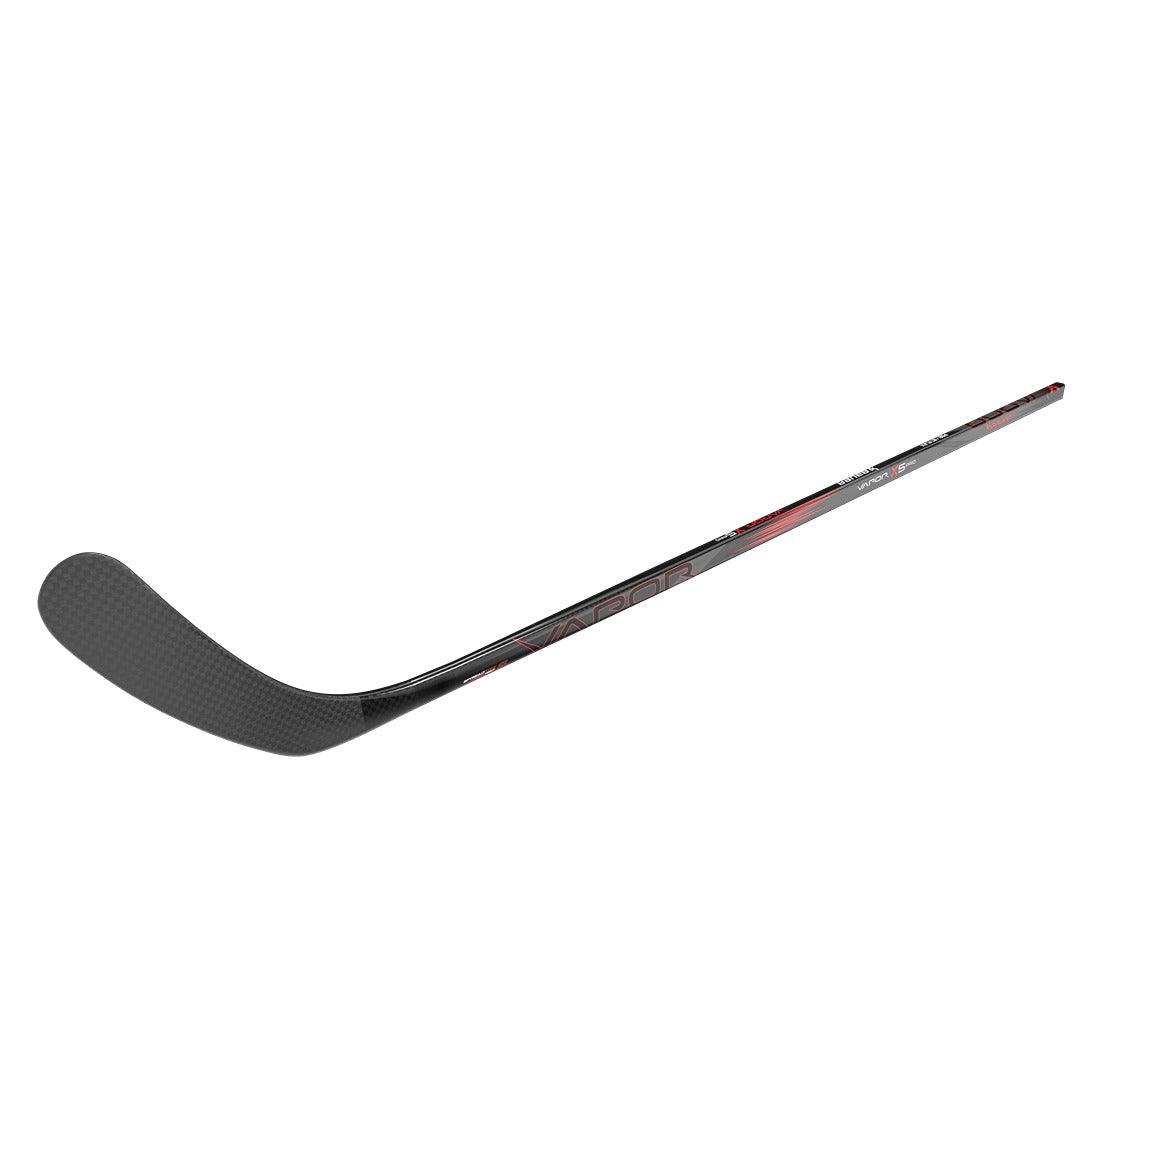 Bauer Vapor X5 Pro Hockey Stick - Senior